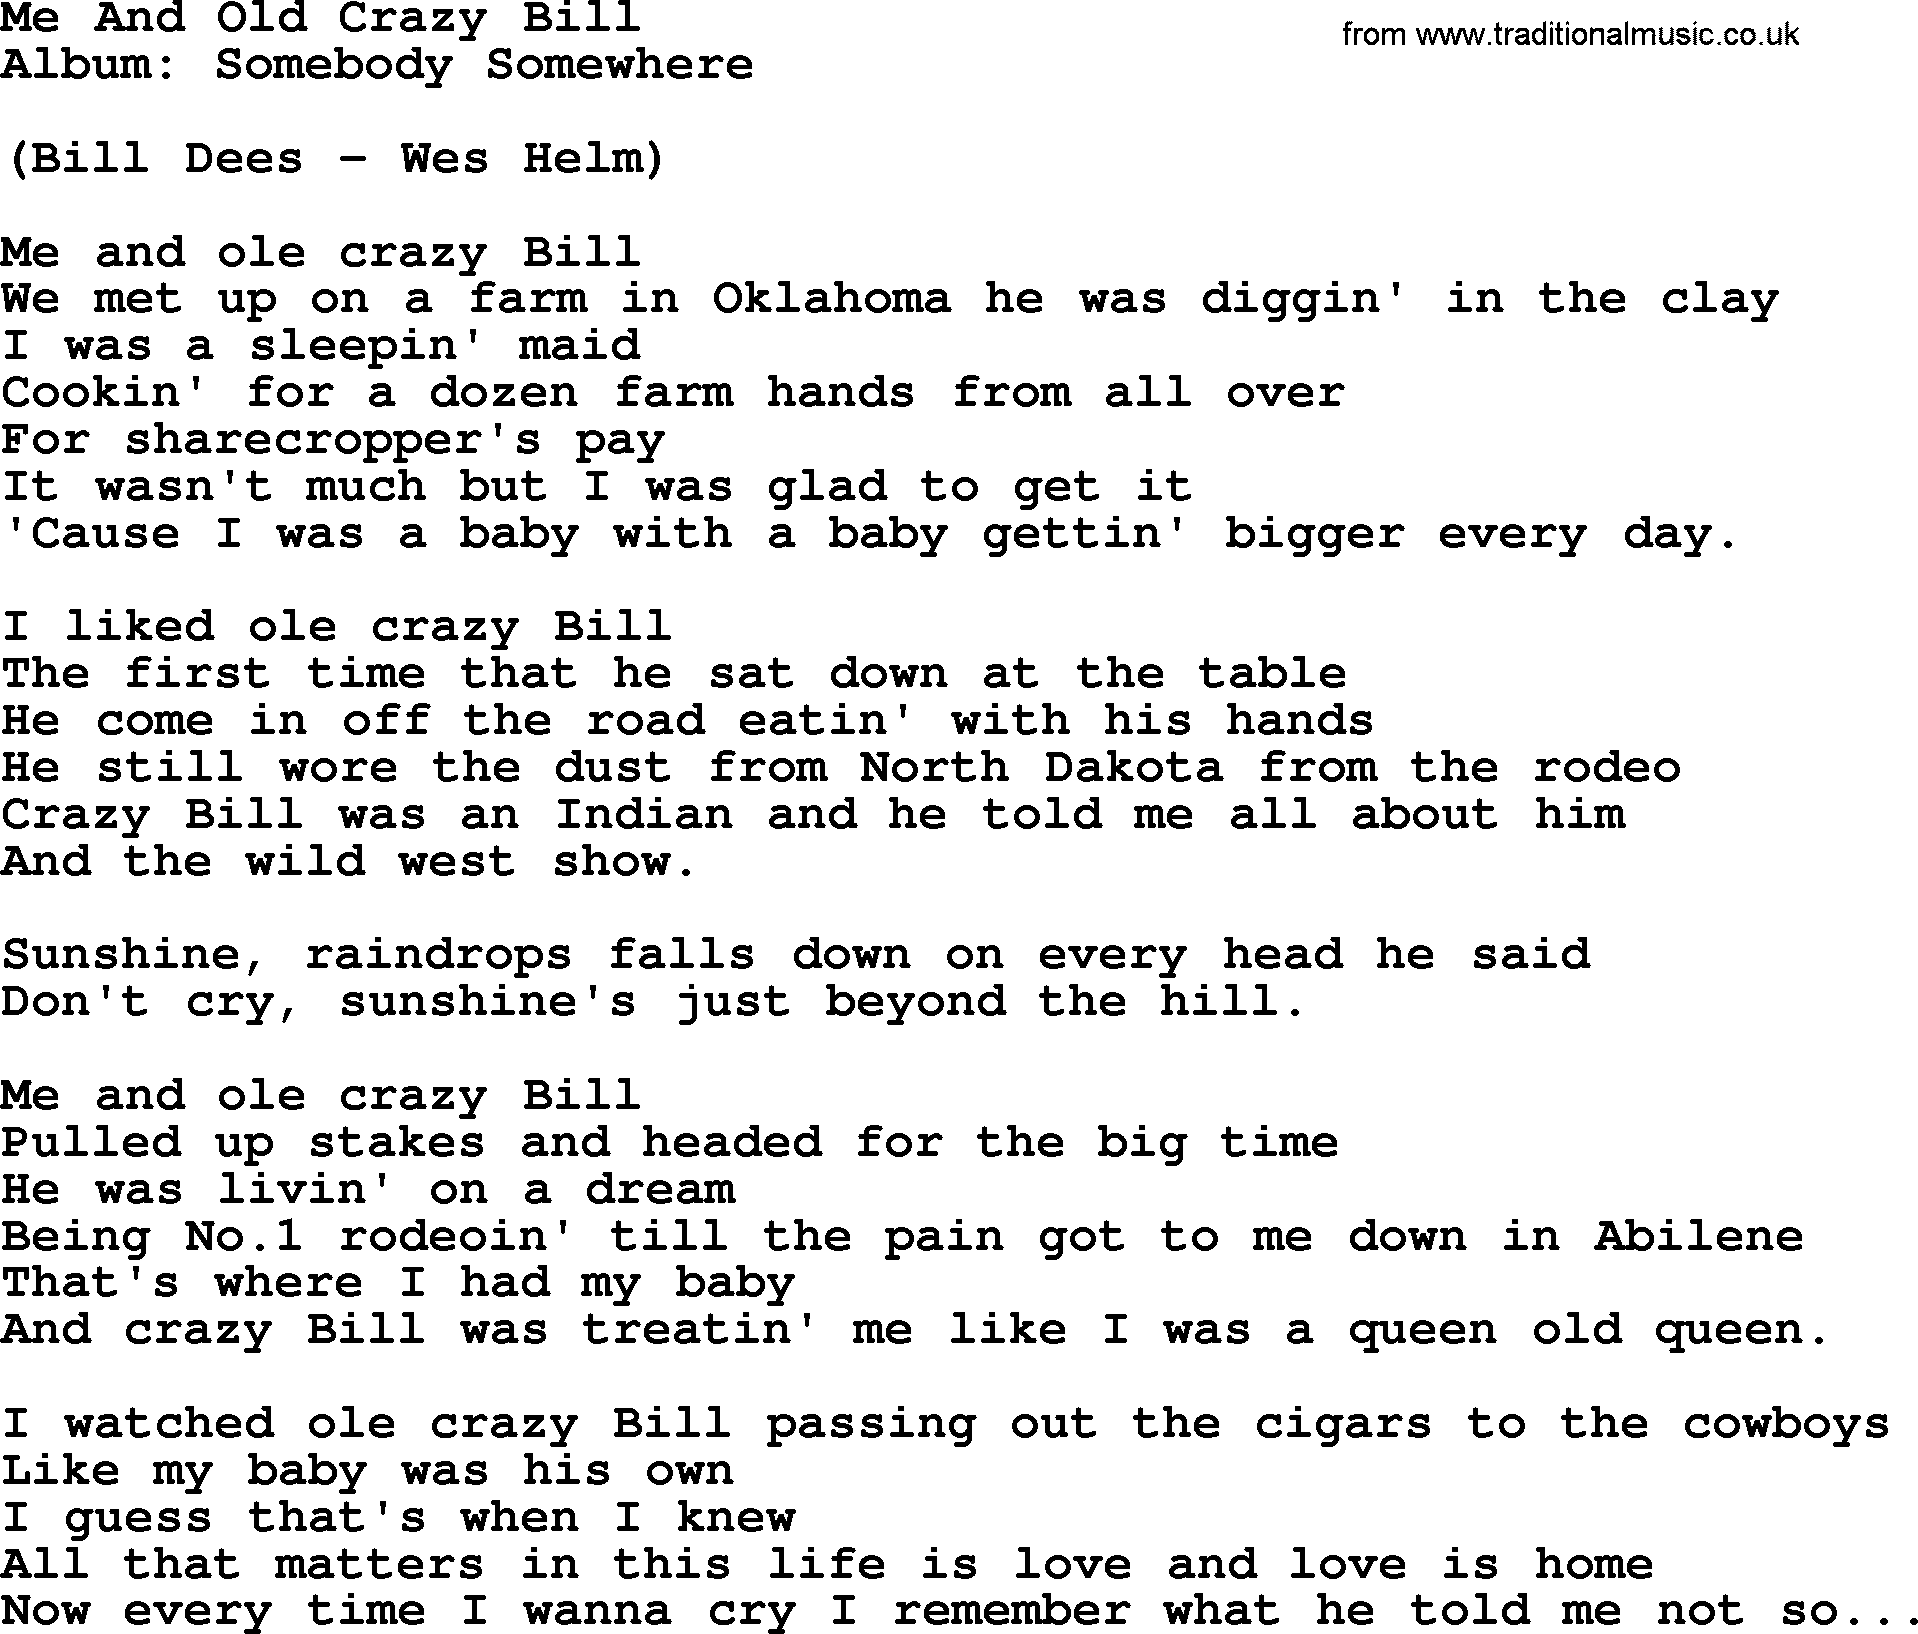 Loretta Lynn song: Me And Old Crazy Bill lyrics